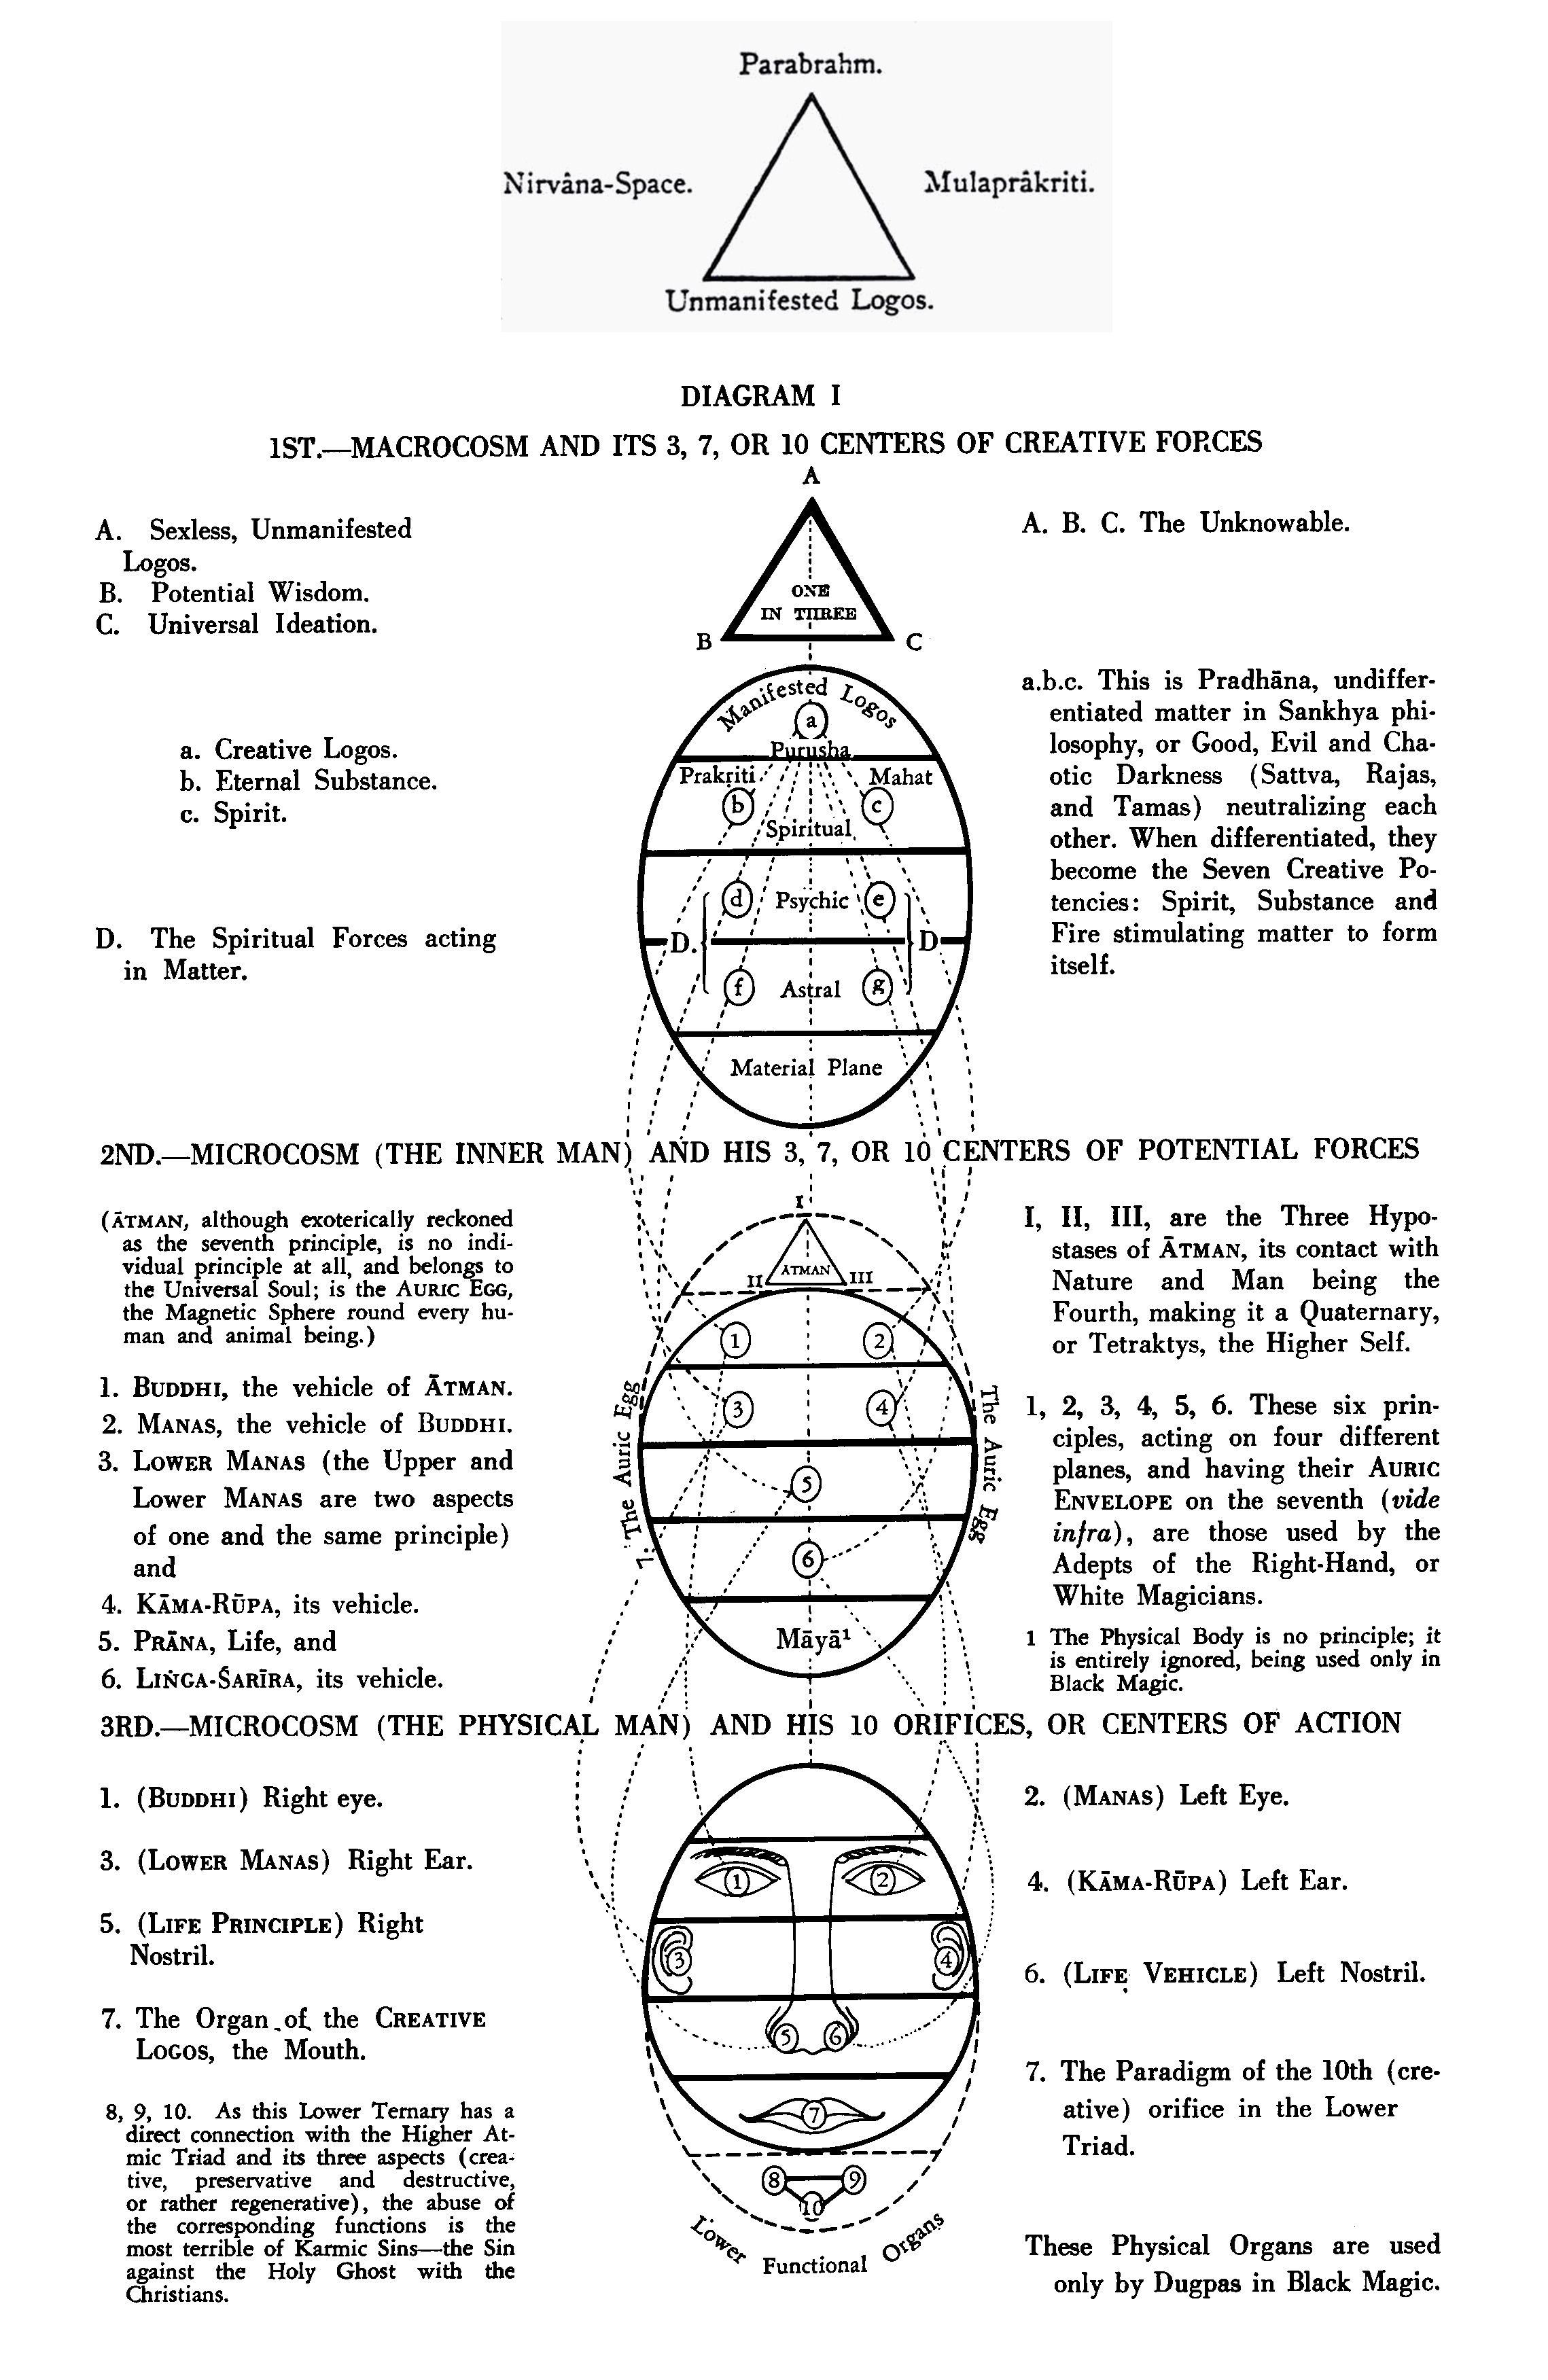 H. B. Blavatsky's Model fra Esoterisk Sektion